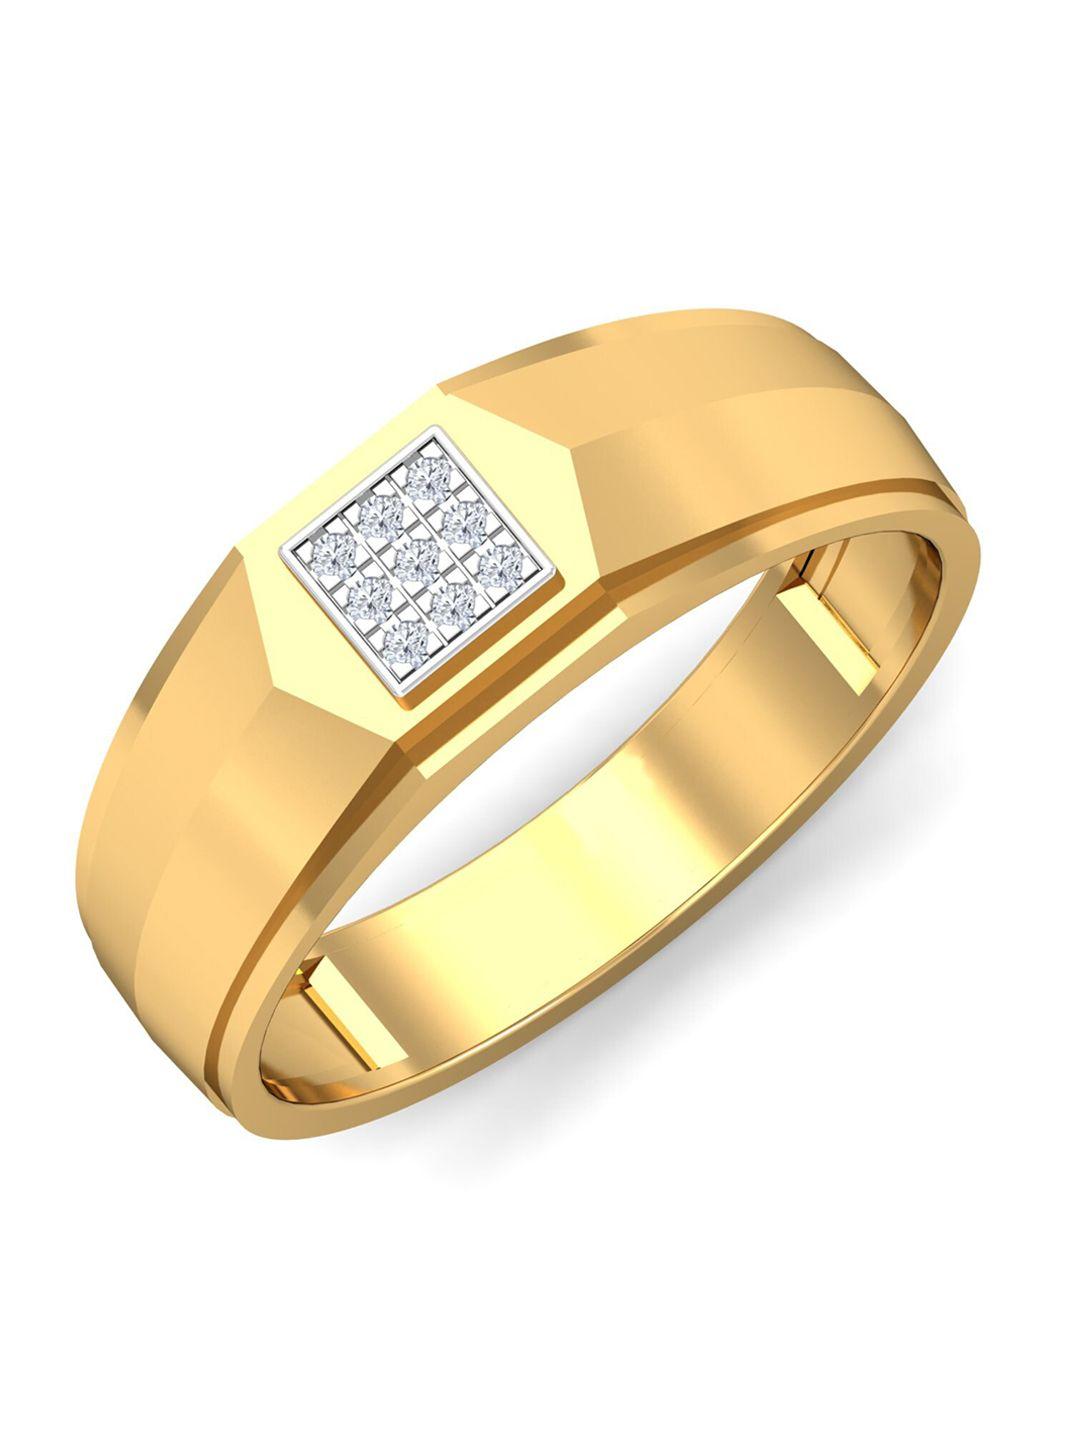 kuberbox-jason-men-18kt-gold-diamond-studded-ring-6.16-gm